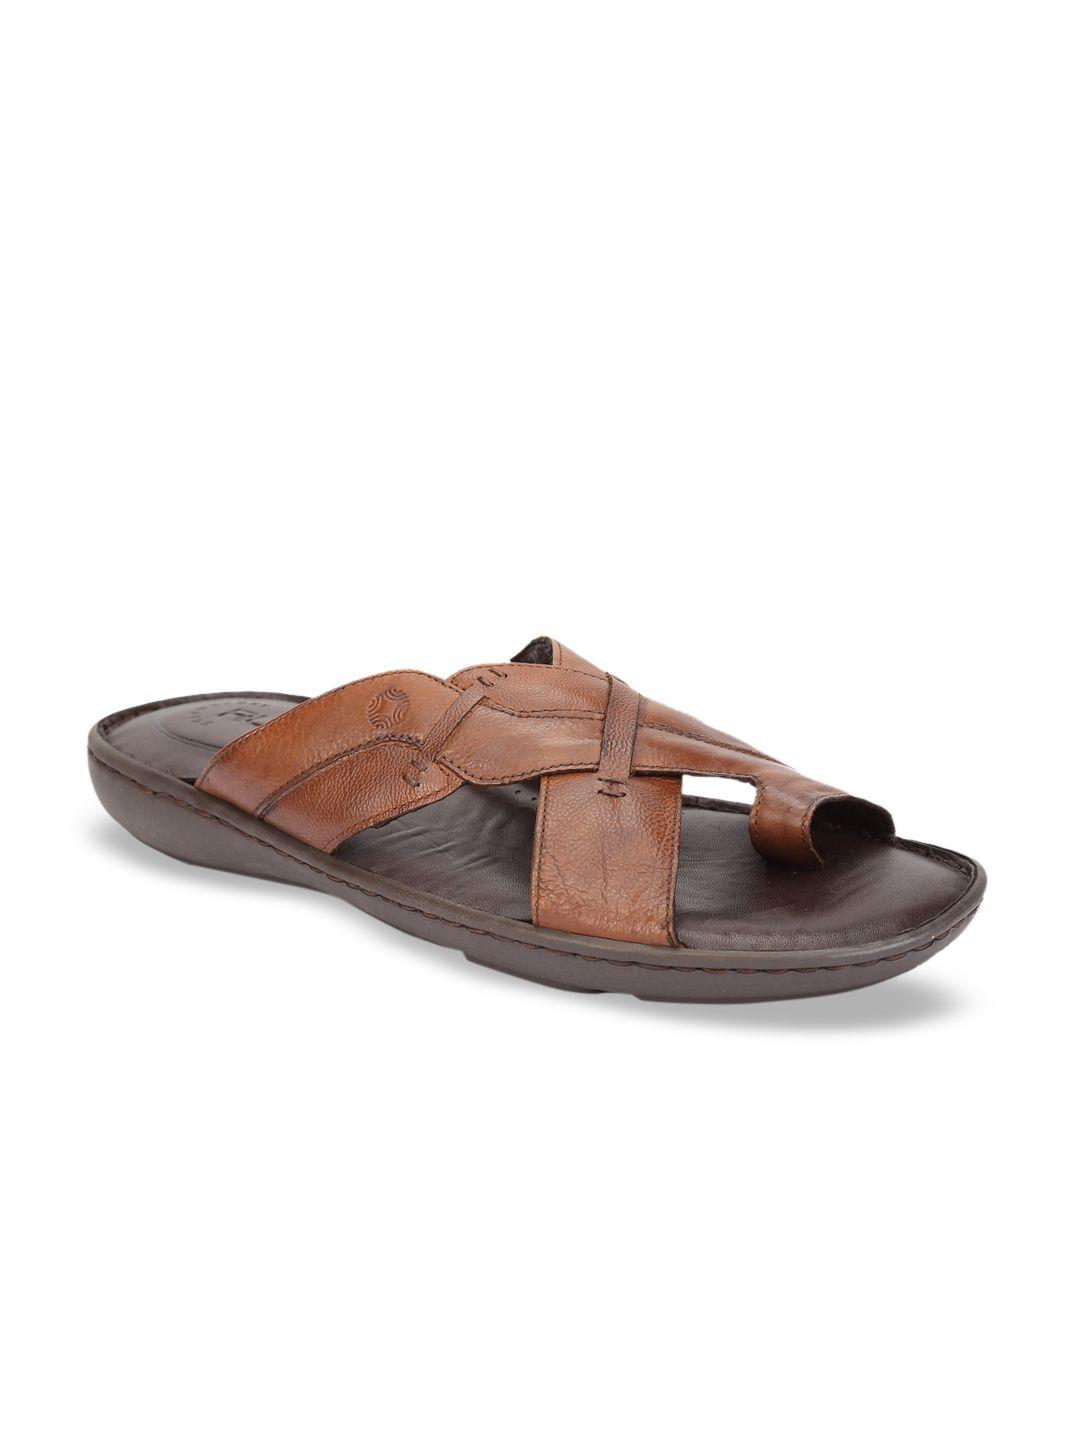 ruosh-men-leather-comfort-sandals